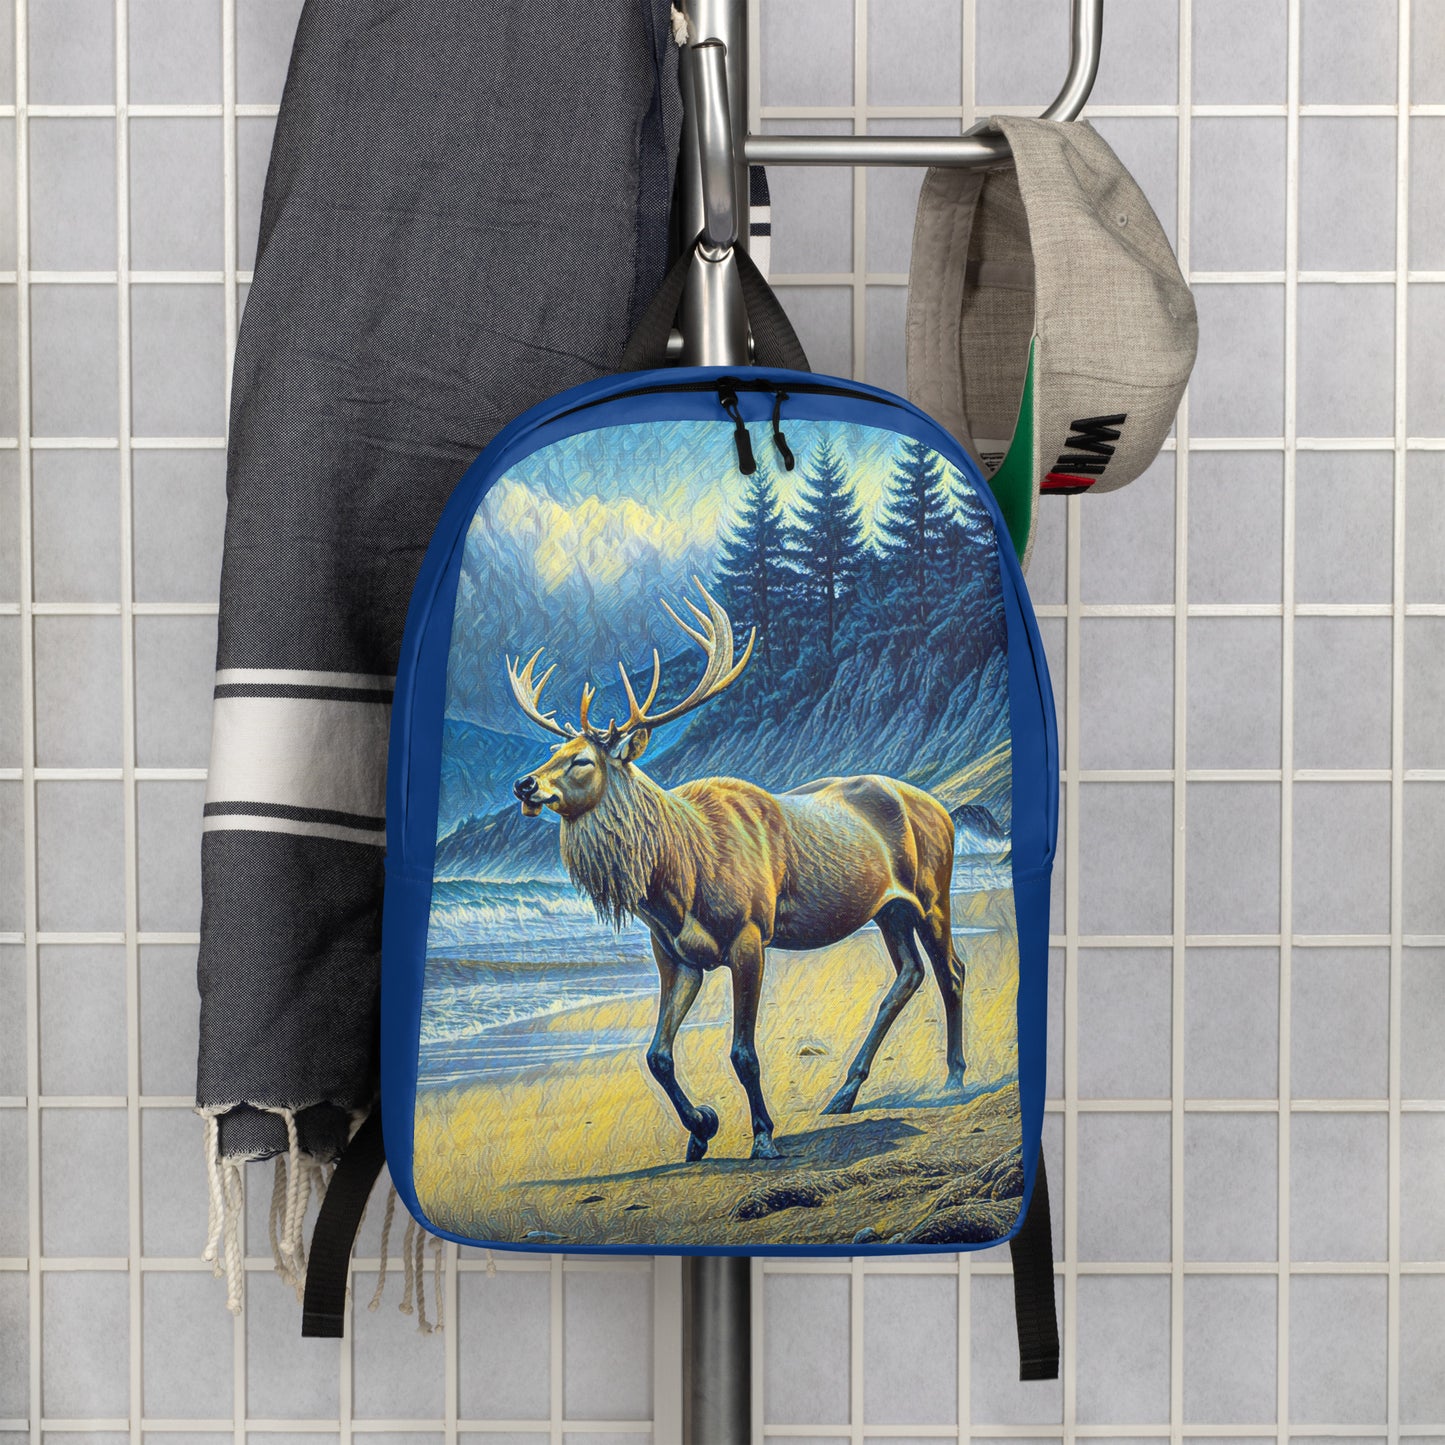 Elk on the Beach - Digital Art - Minimalist Backpack